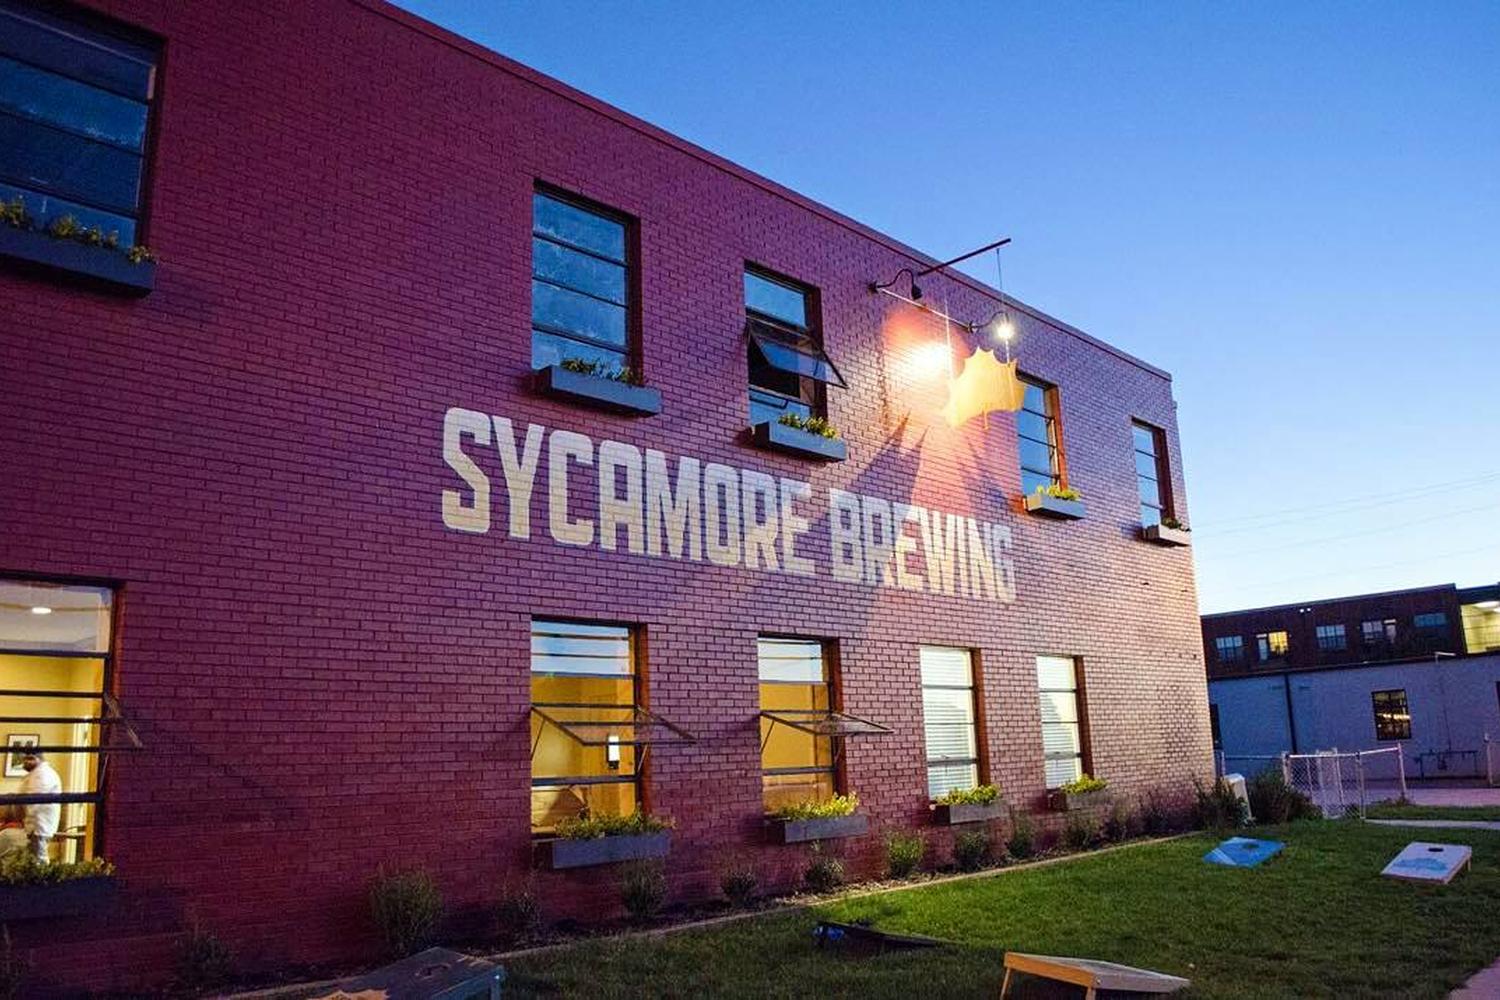 Sycamore Brewing Beer Garden Is Pet Friendly